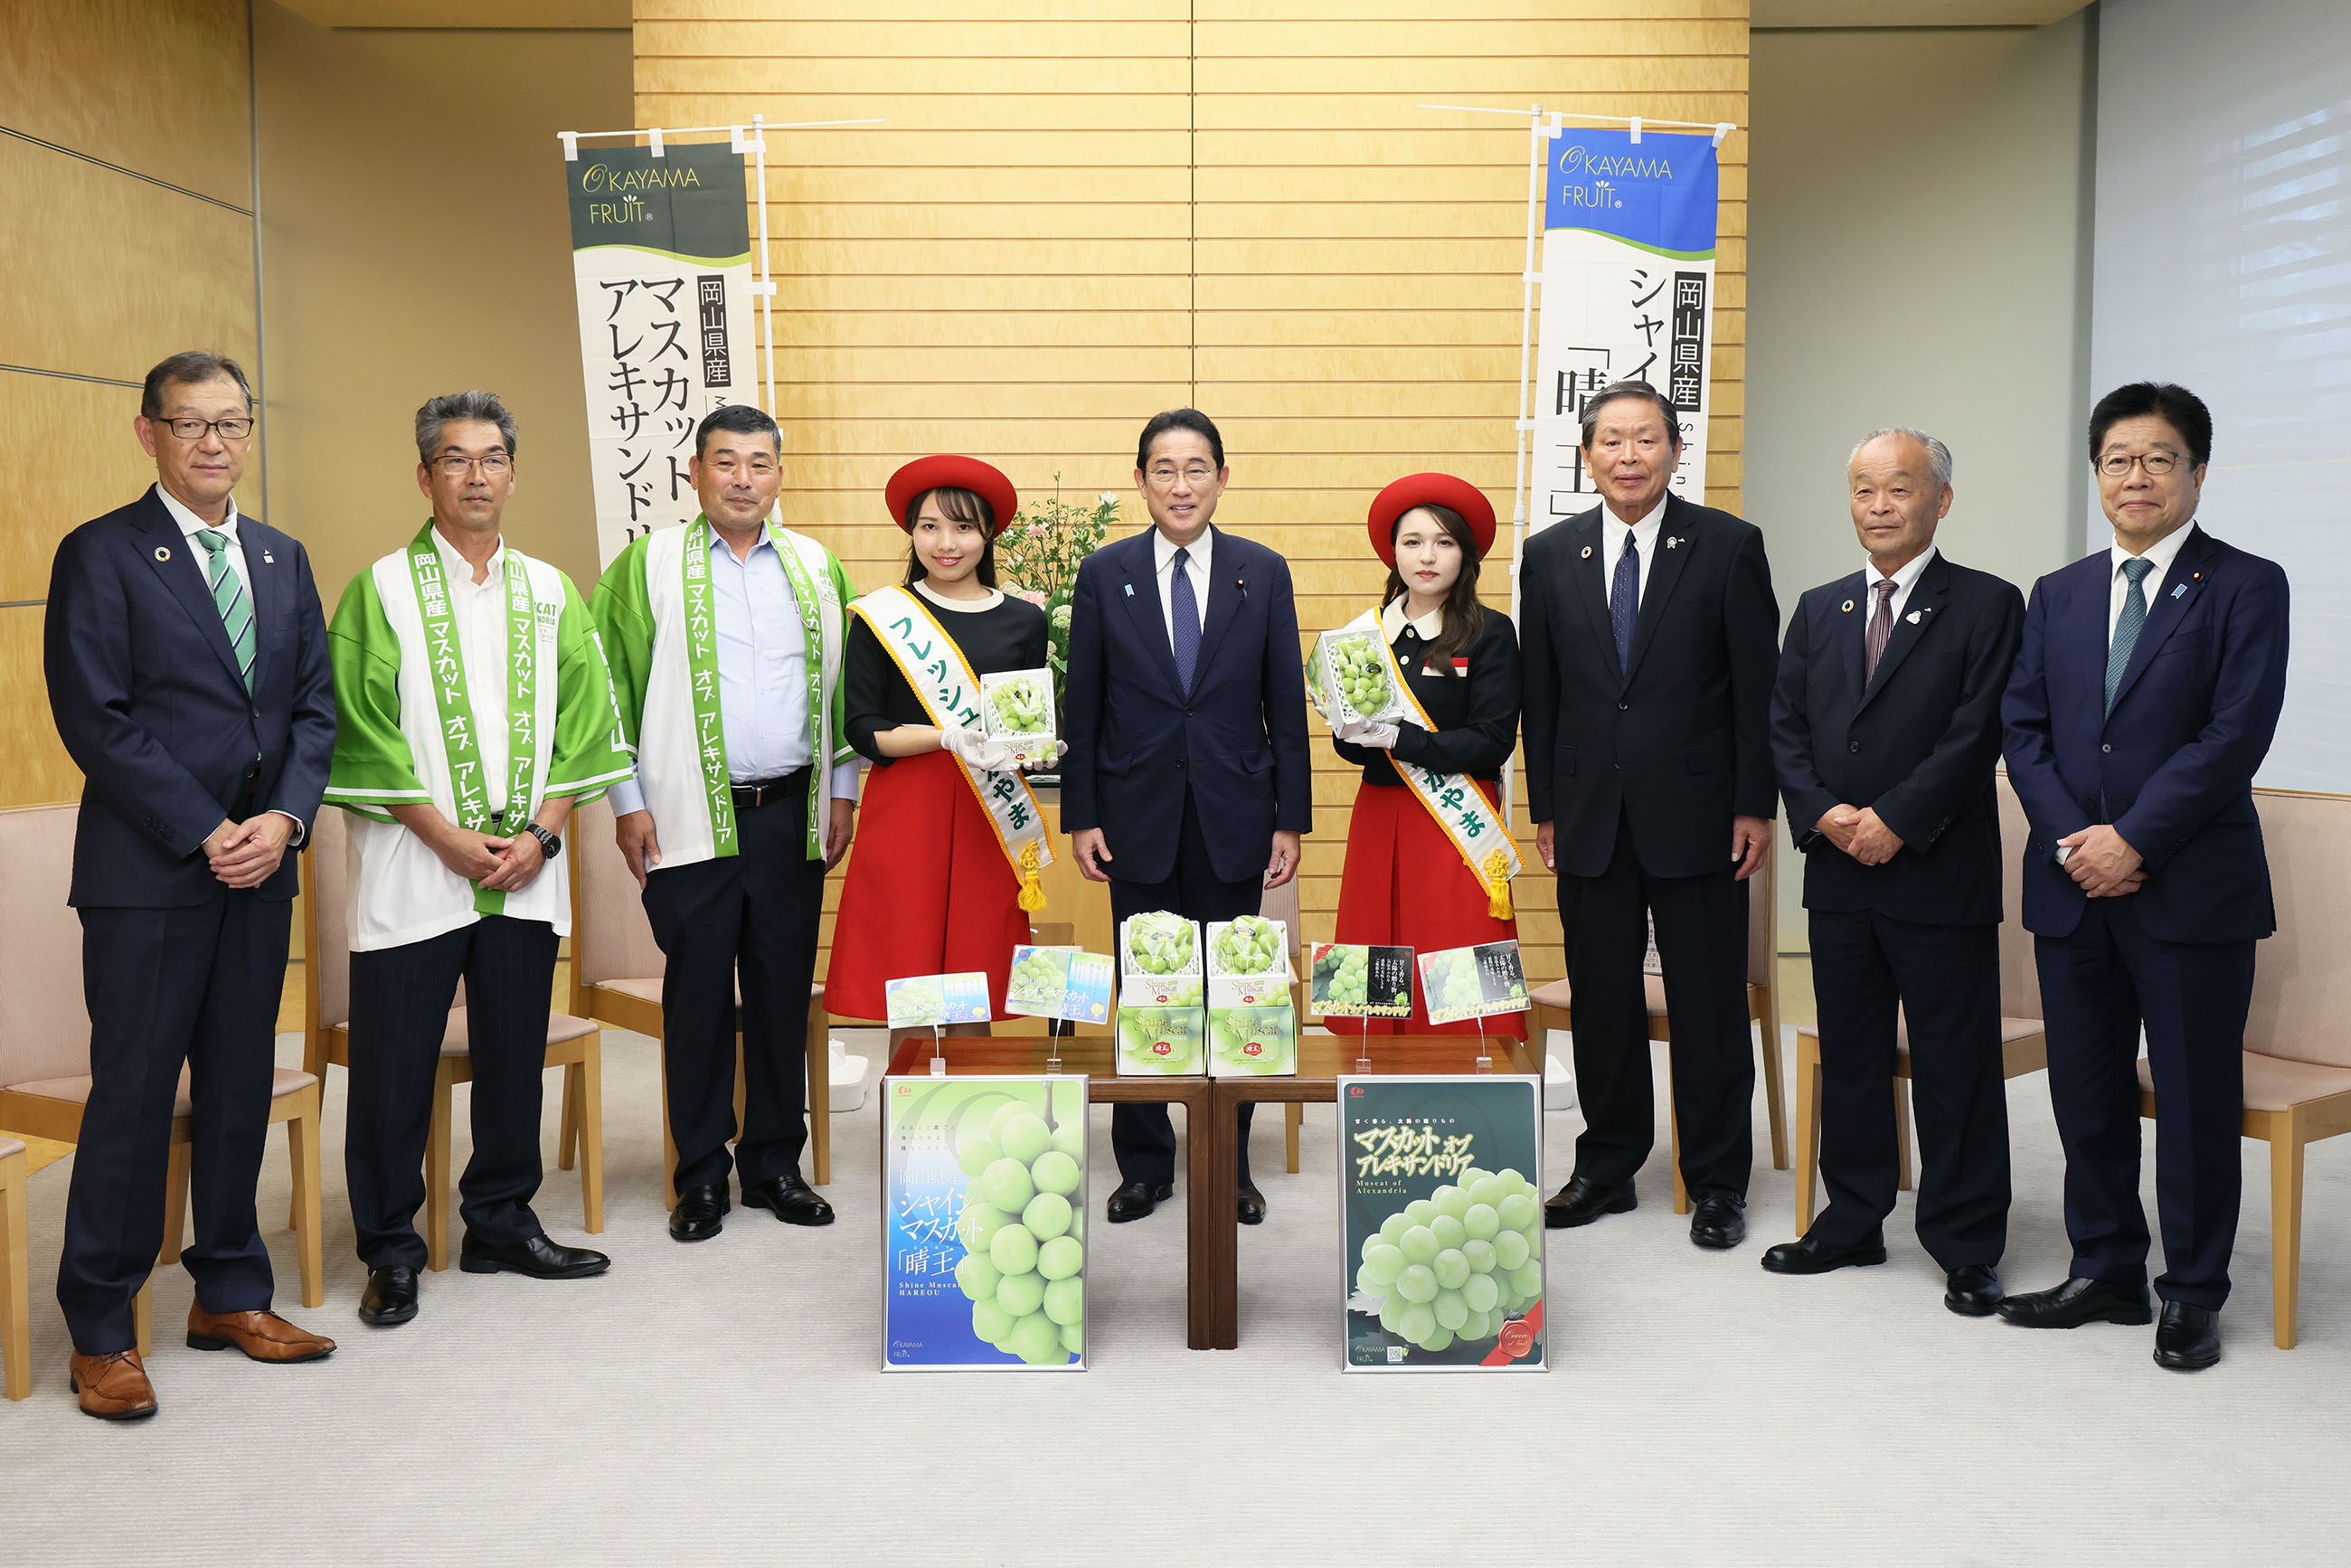 Presentation of Shine Muscat Grapes by Japan Agricultural Cooperatives (JA) Hare-no-kuni Okayama